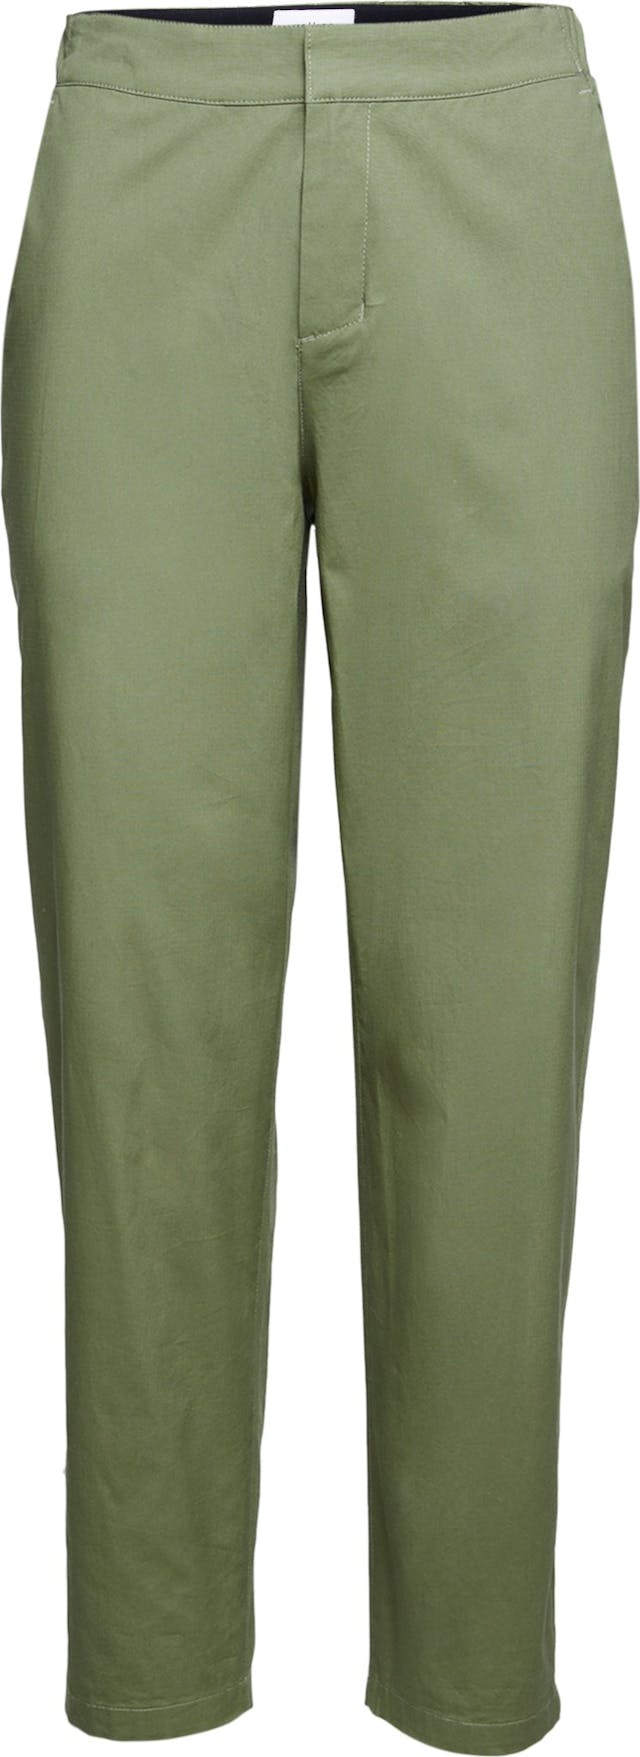 Product image for Sololaki Pants - Women's